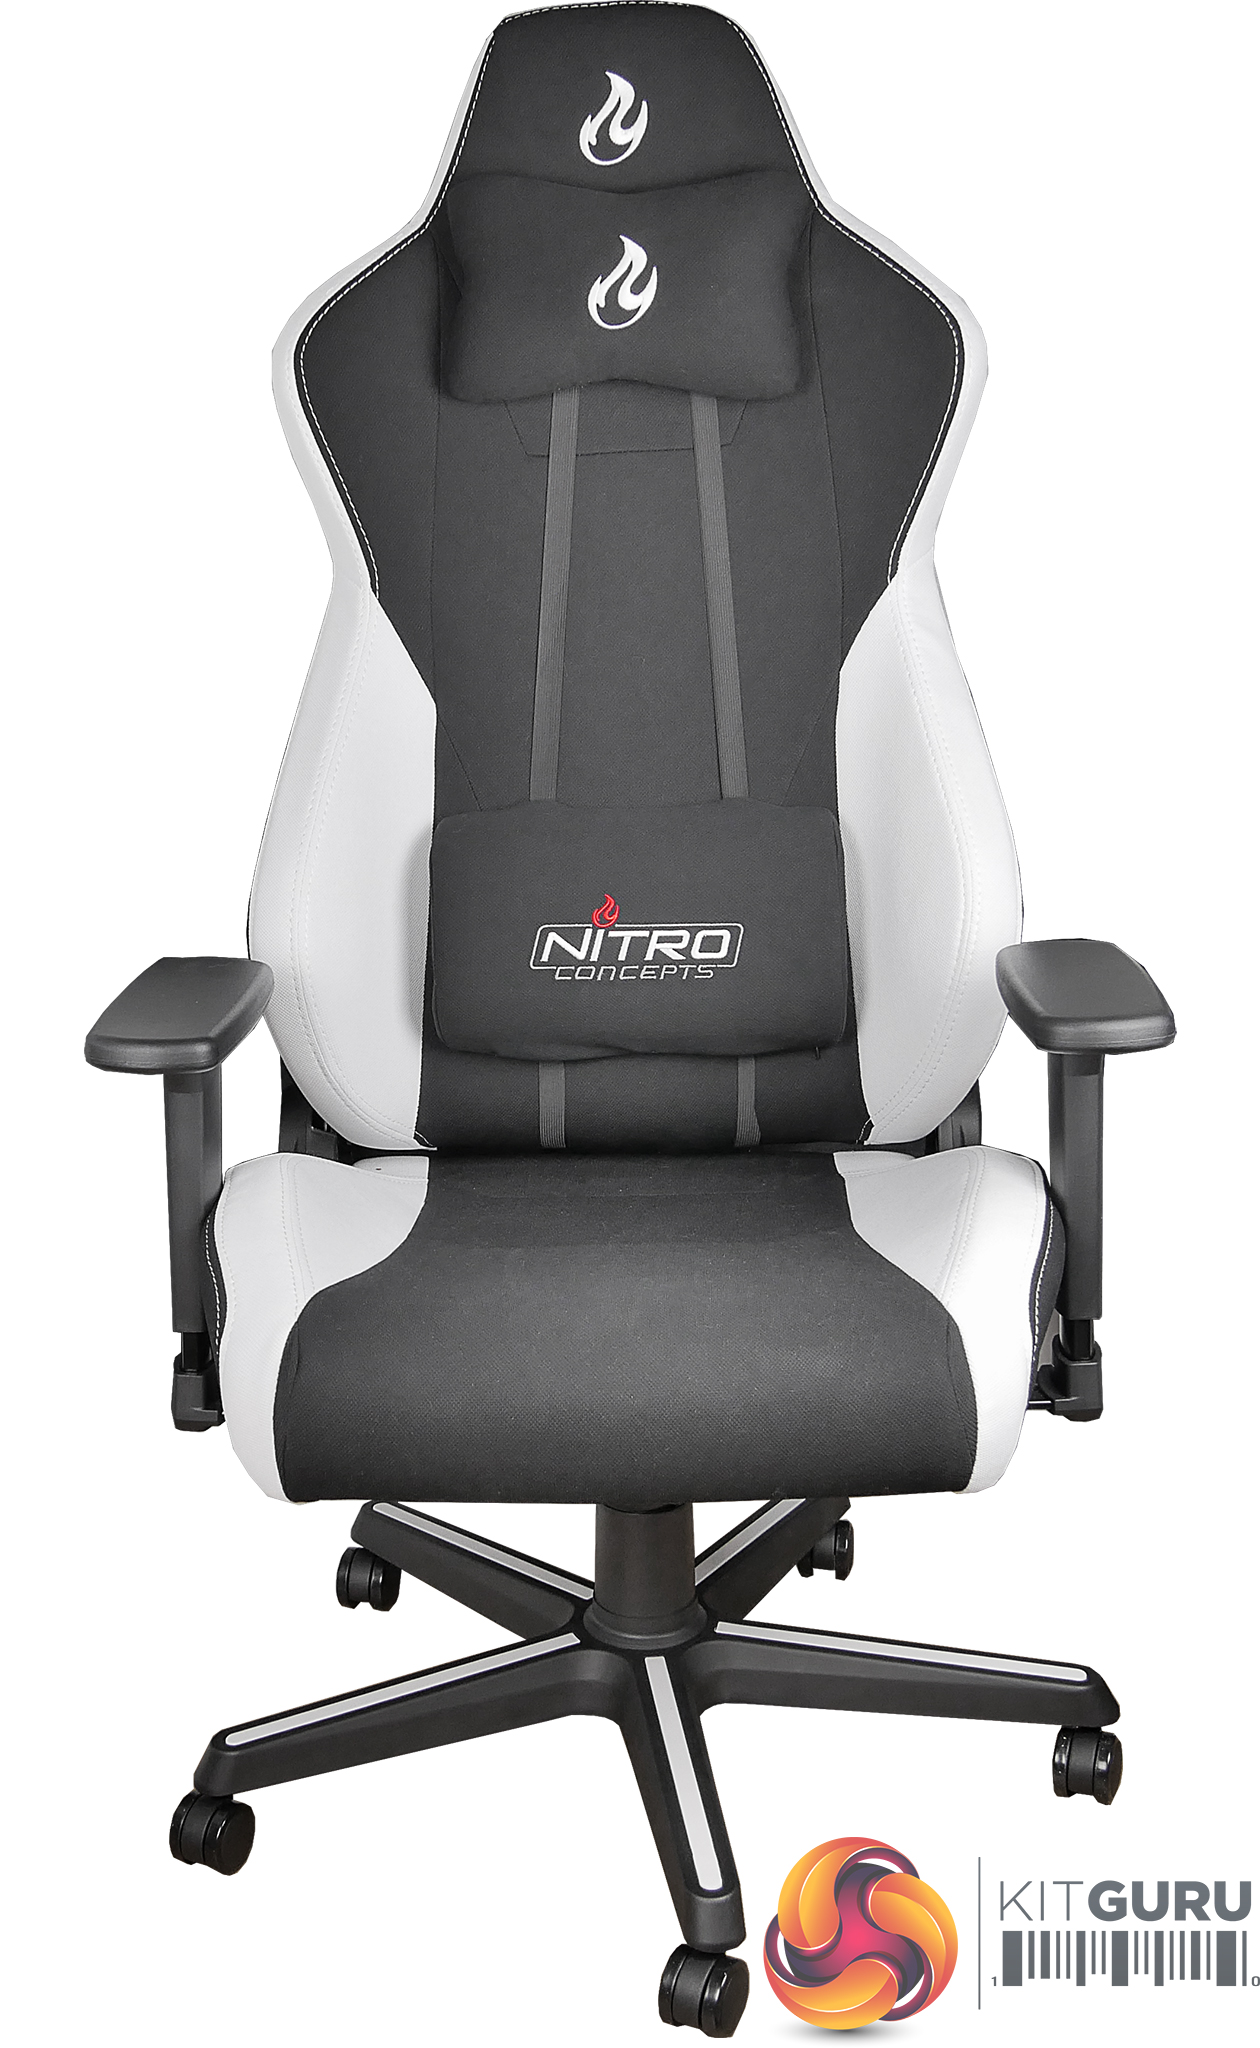 Nitro Concepts S300 Gaming Chair Review Kitguru